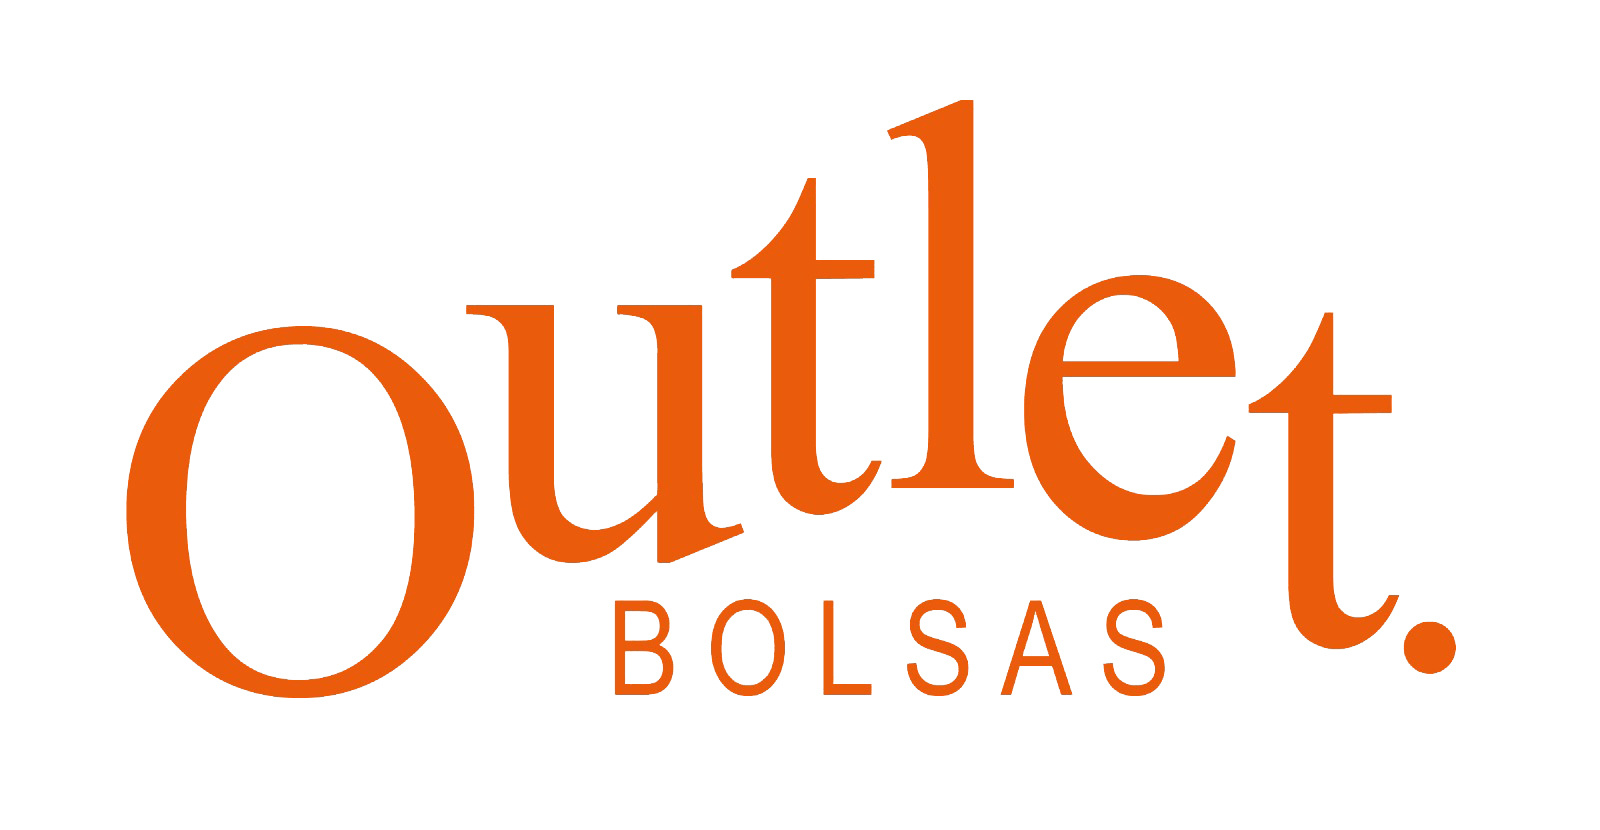 Outlet Bolsas